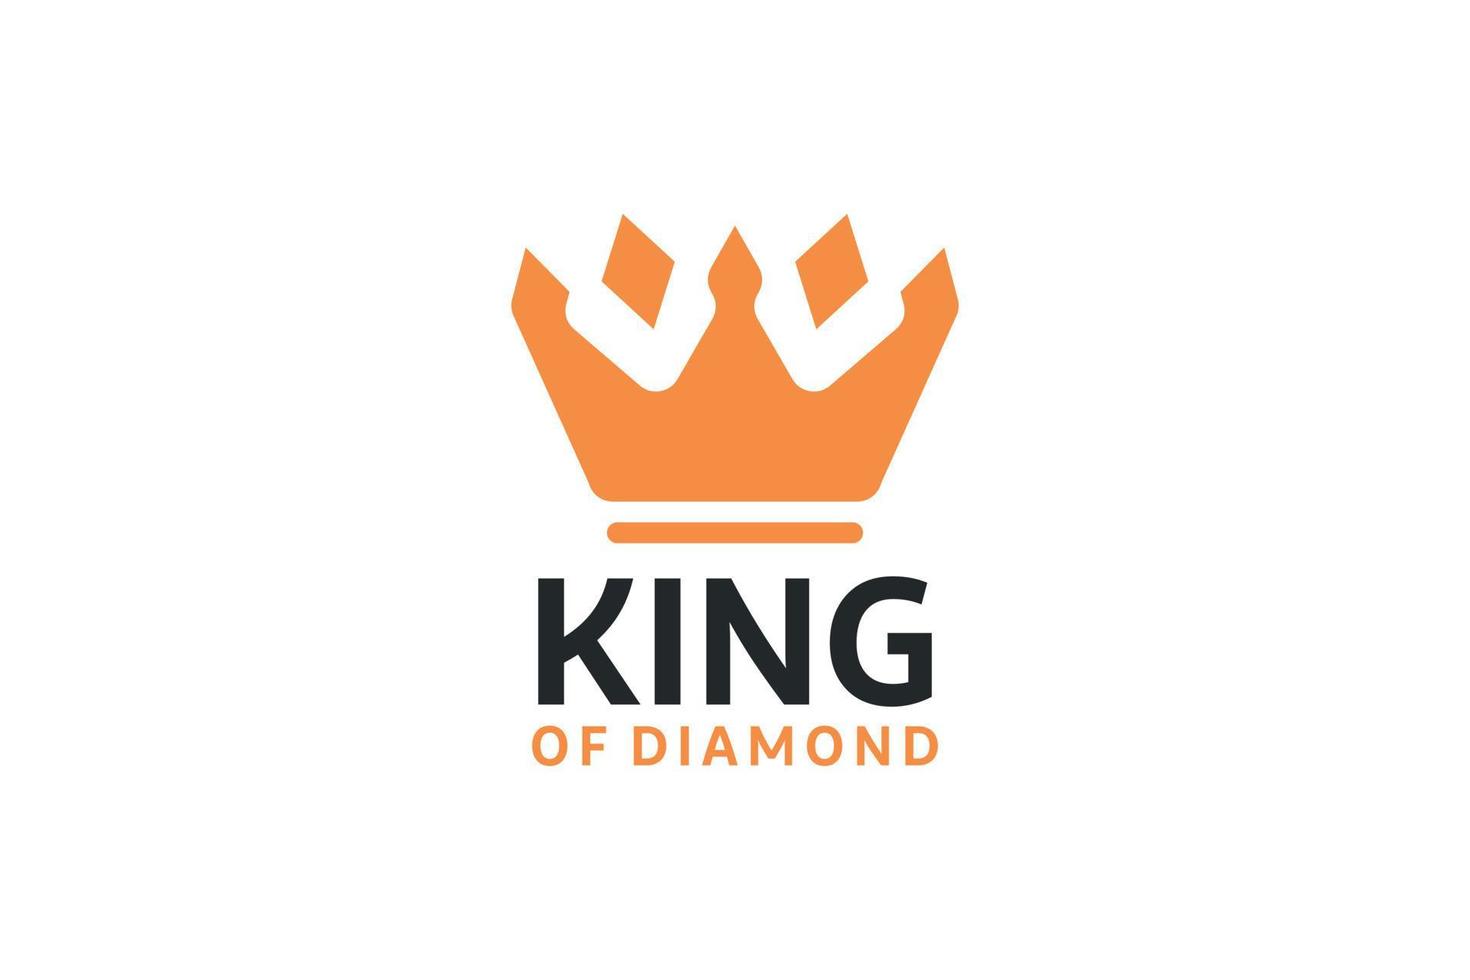 kung diamant krona aning logotyp begrepp vektor